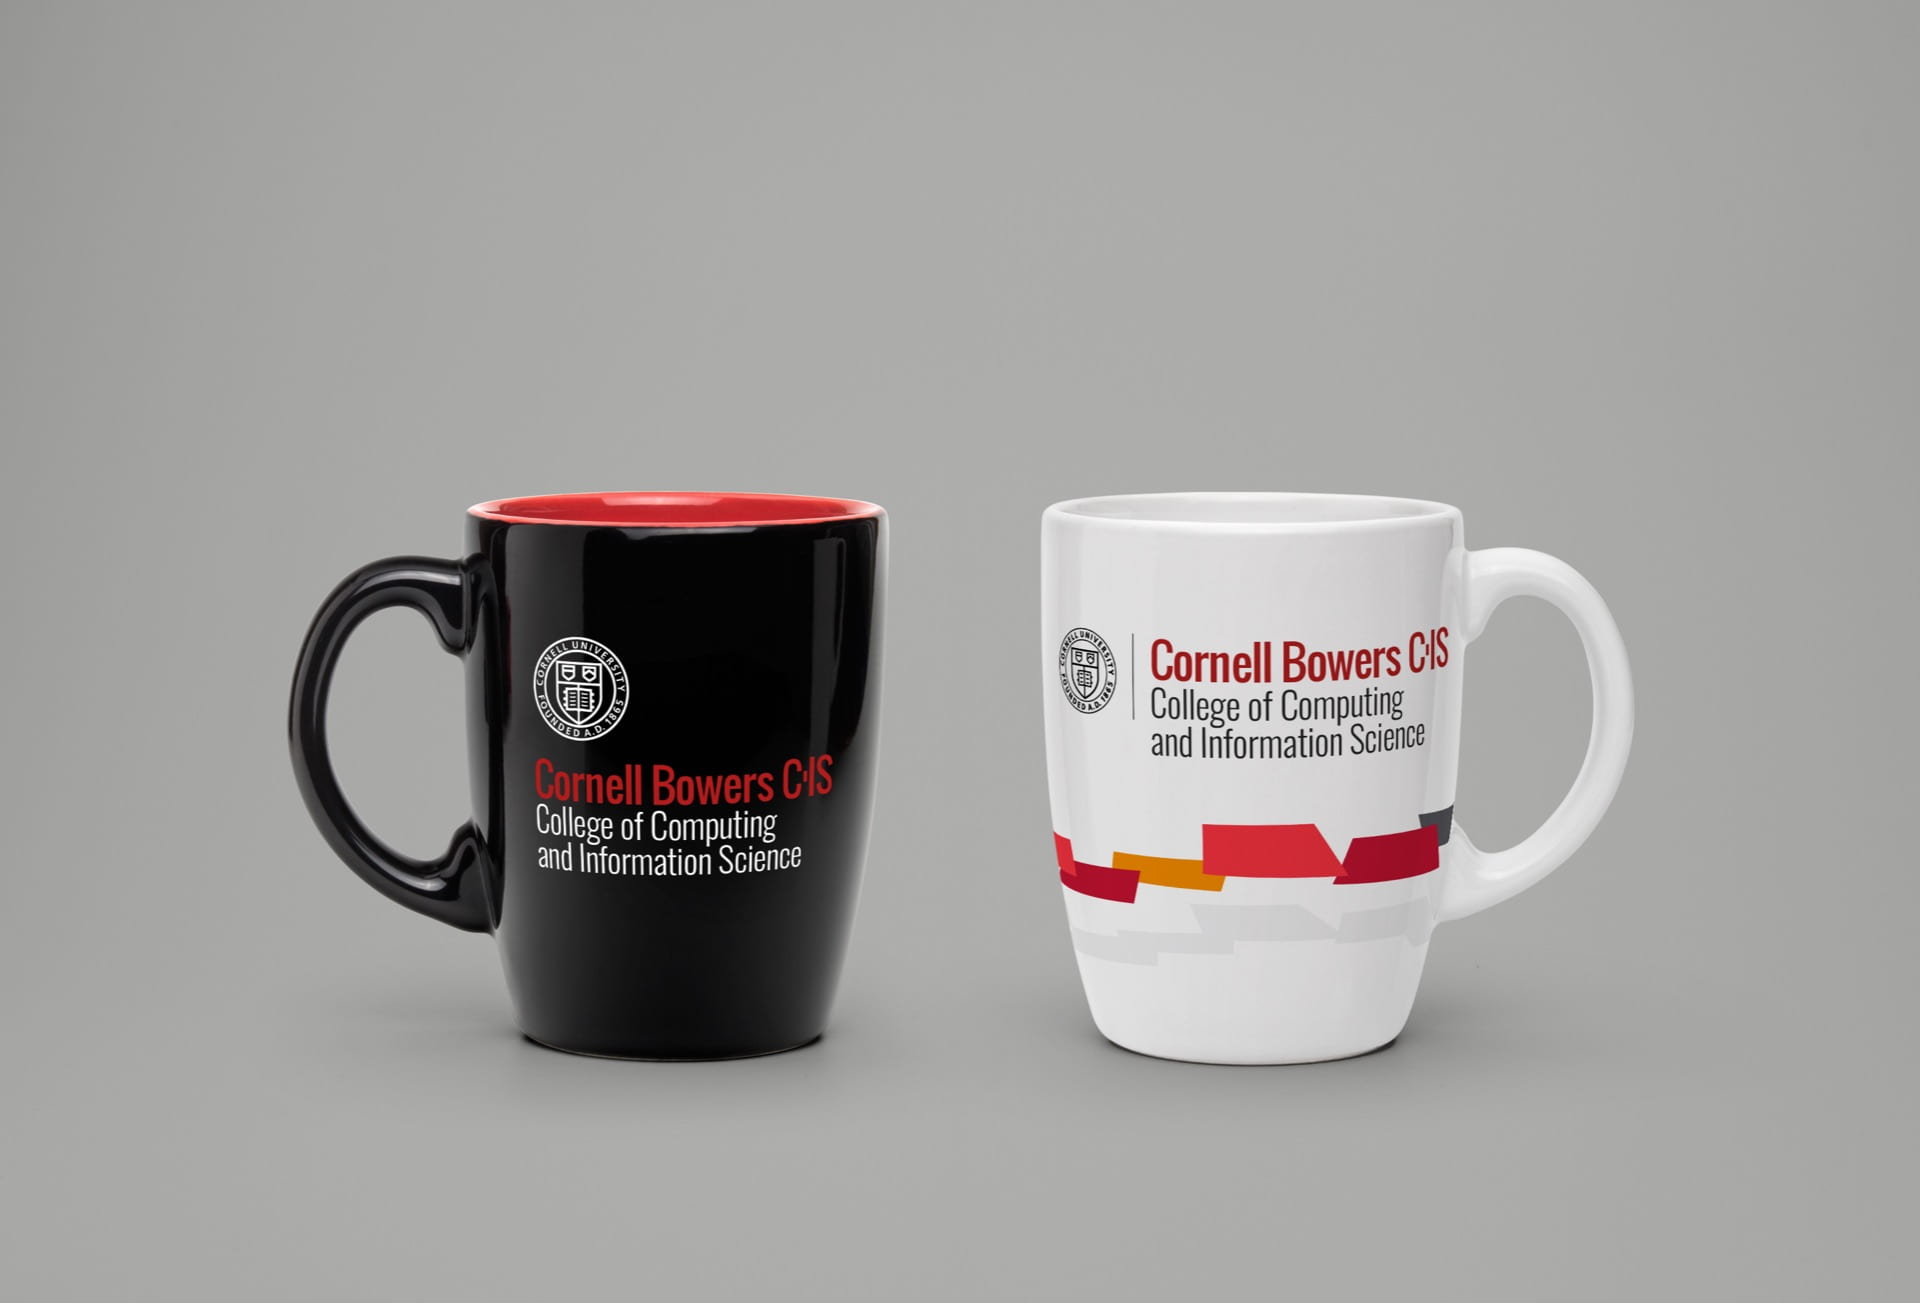 Coffee mugs with Cornell Bowers CIS lockups